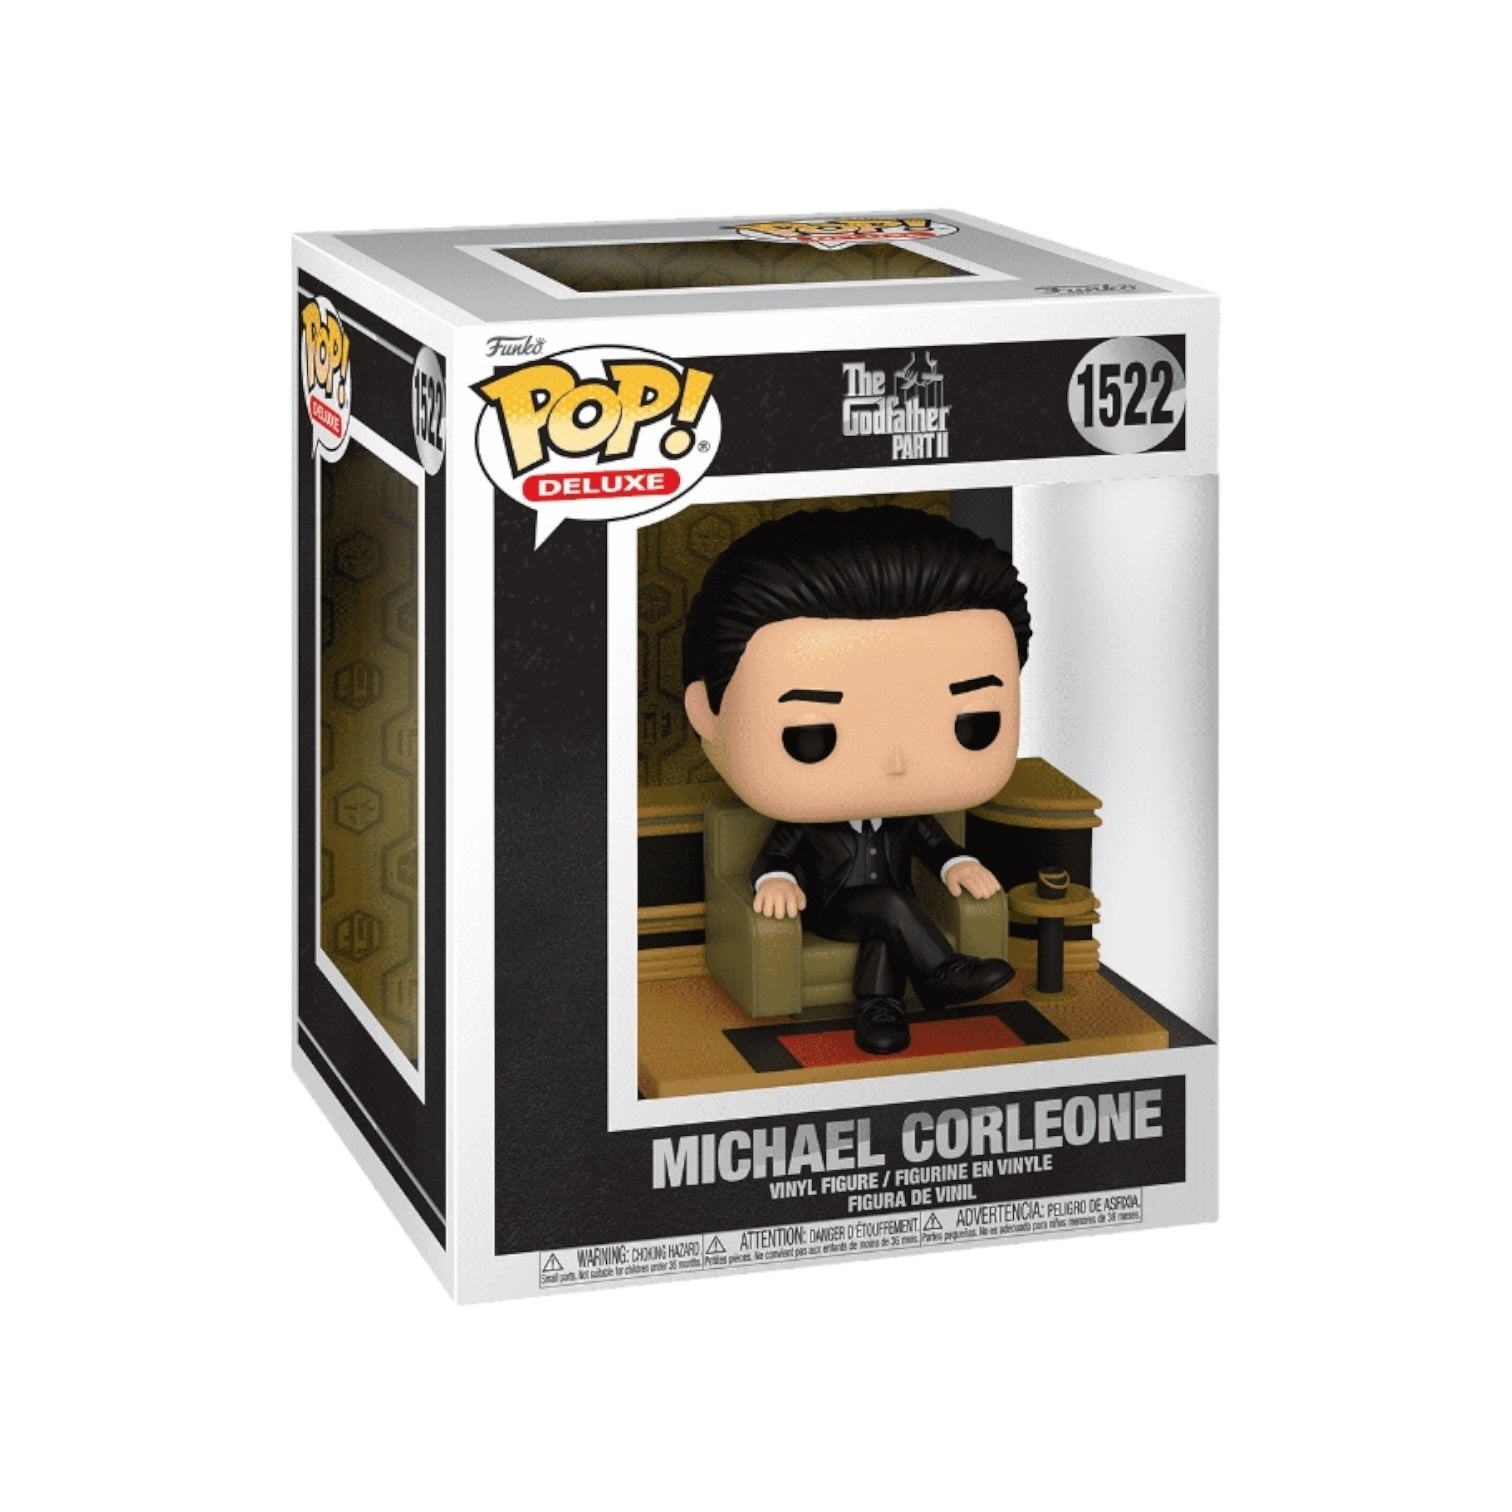 Michael Corleone #1522 Deluxe Funko Pop! - The Godfather Part II